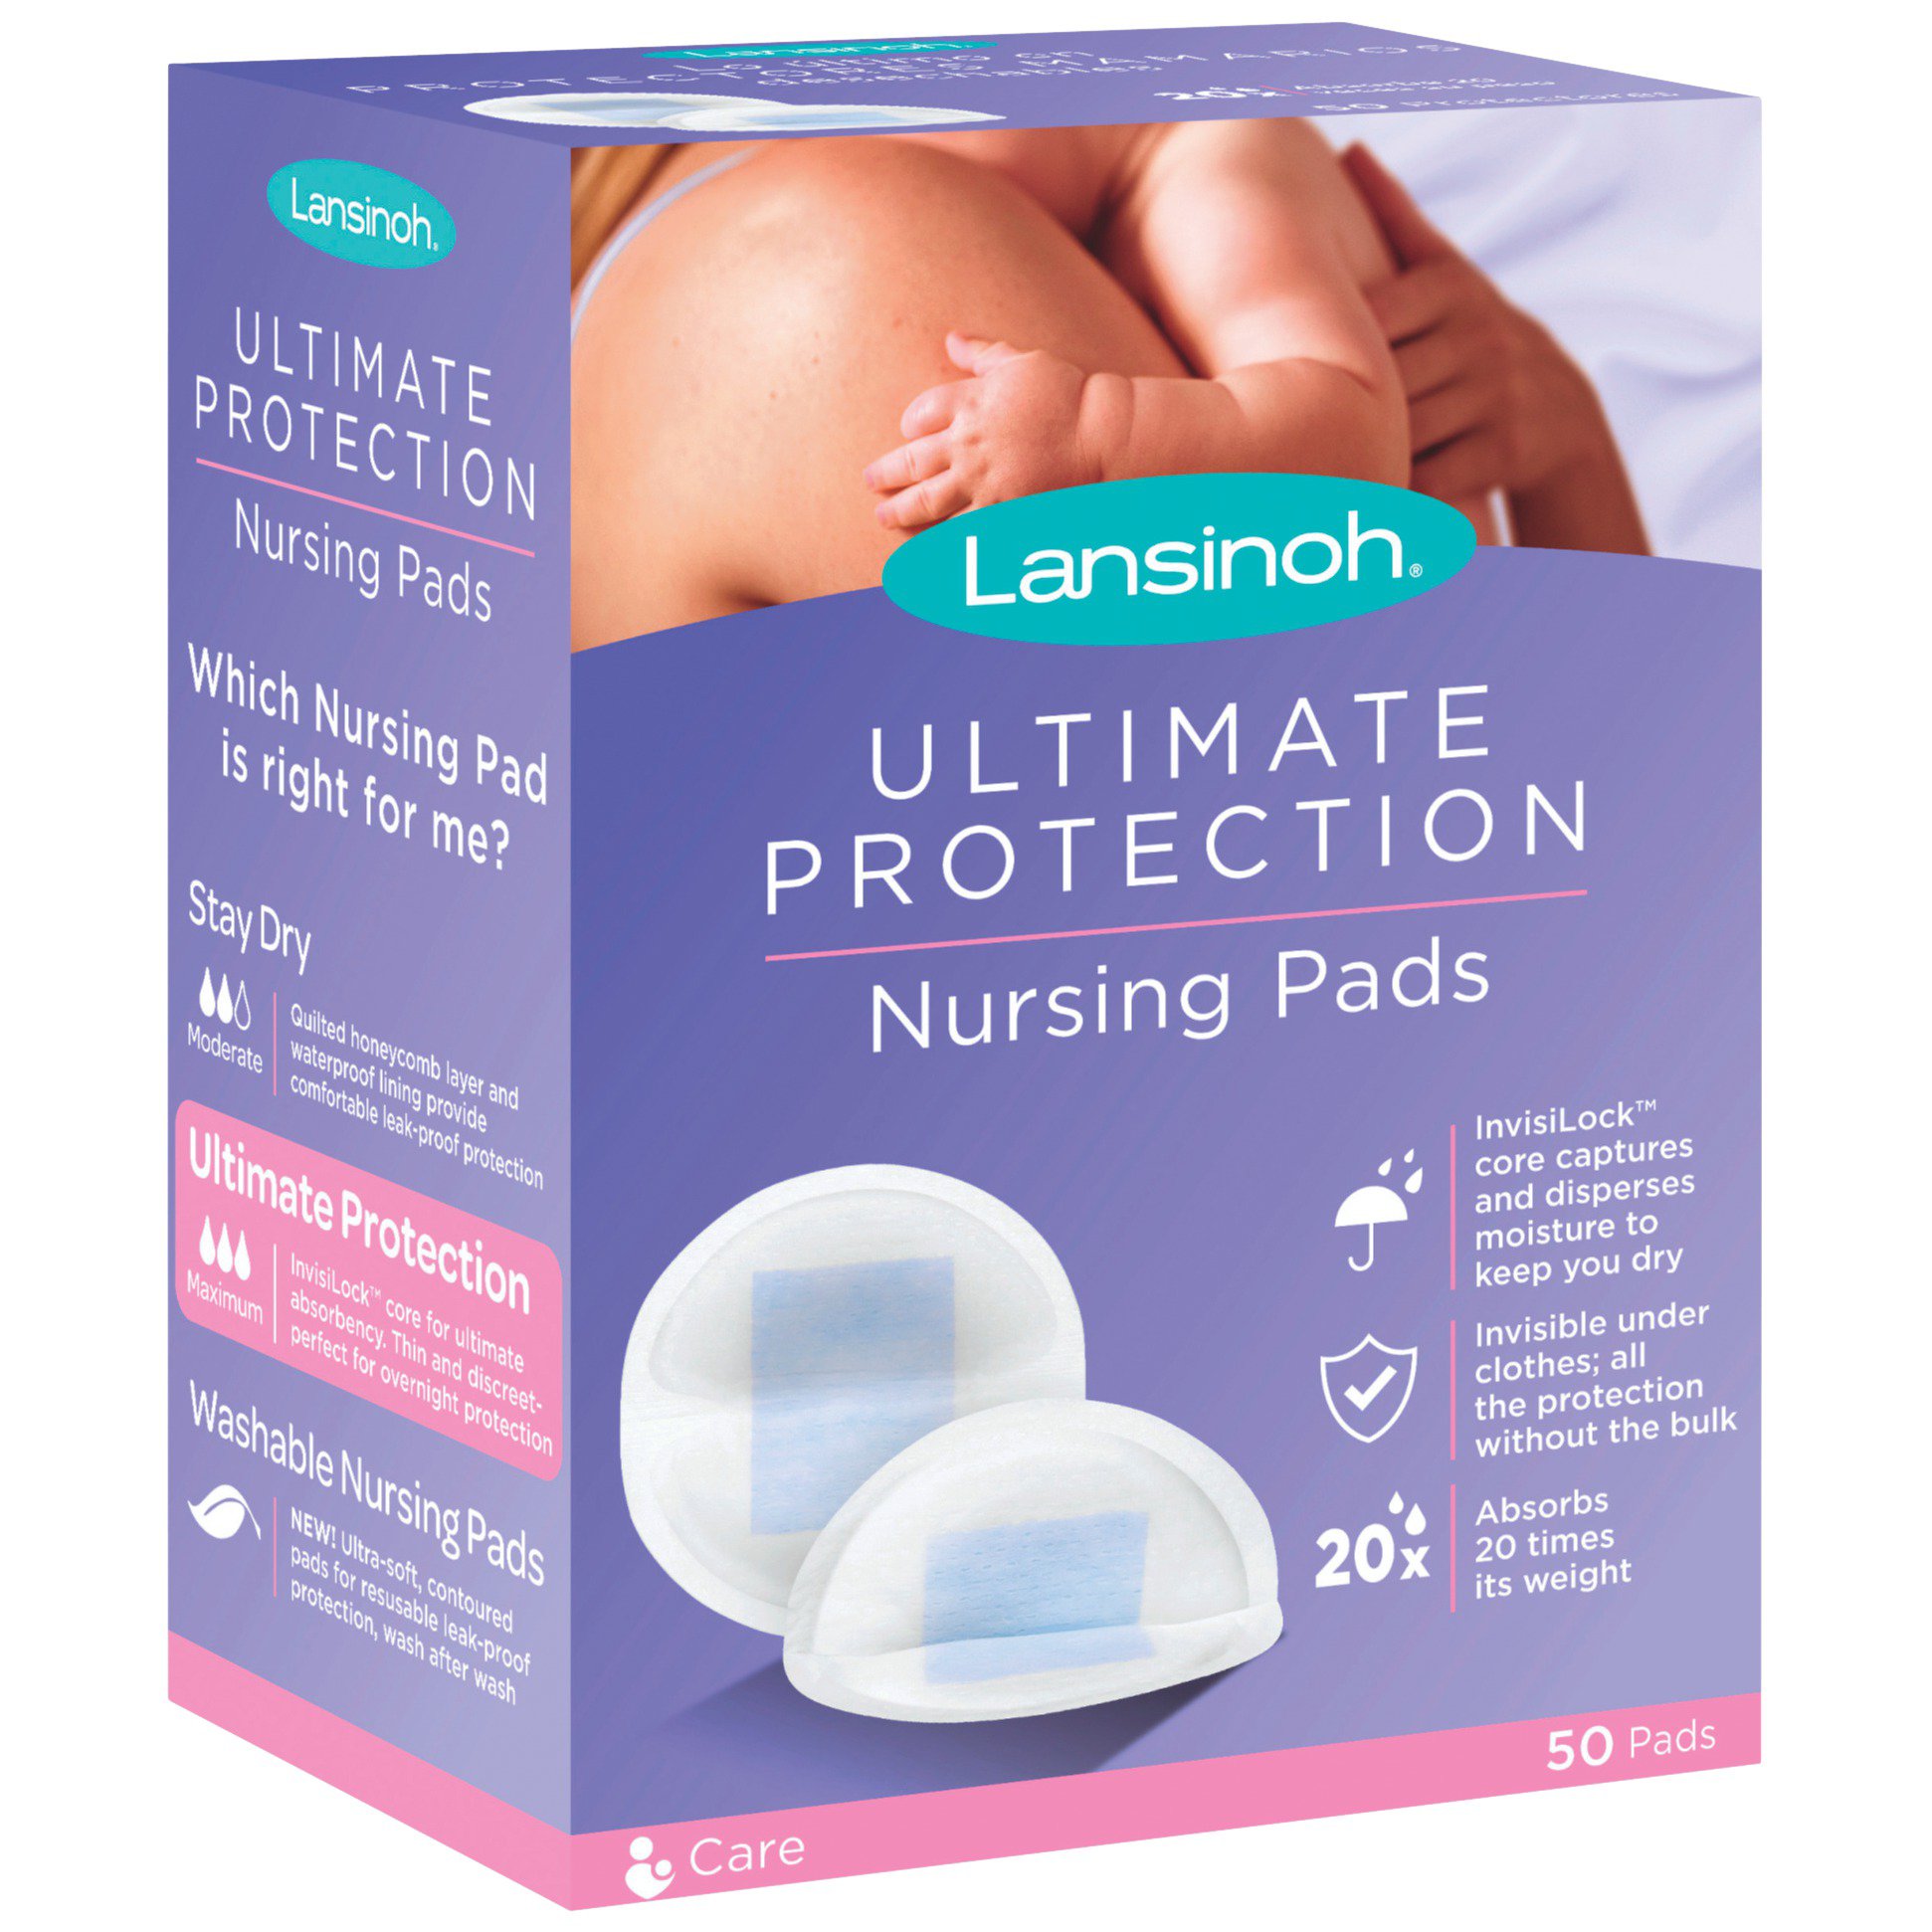 nursing pads